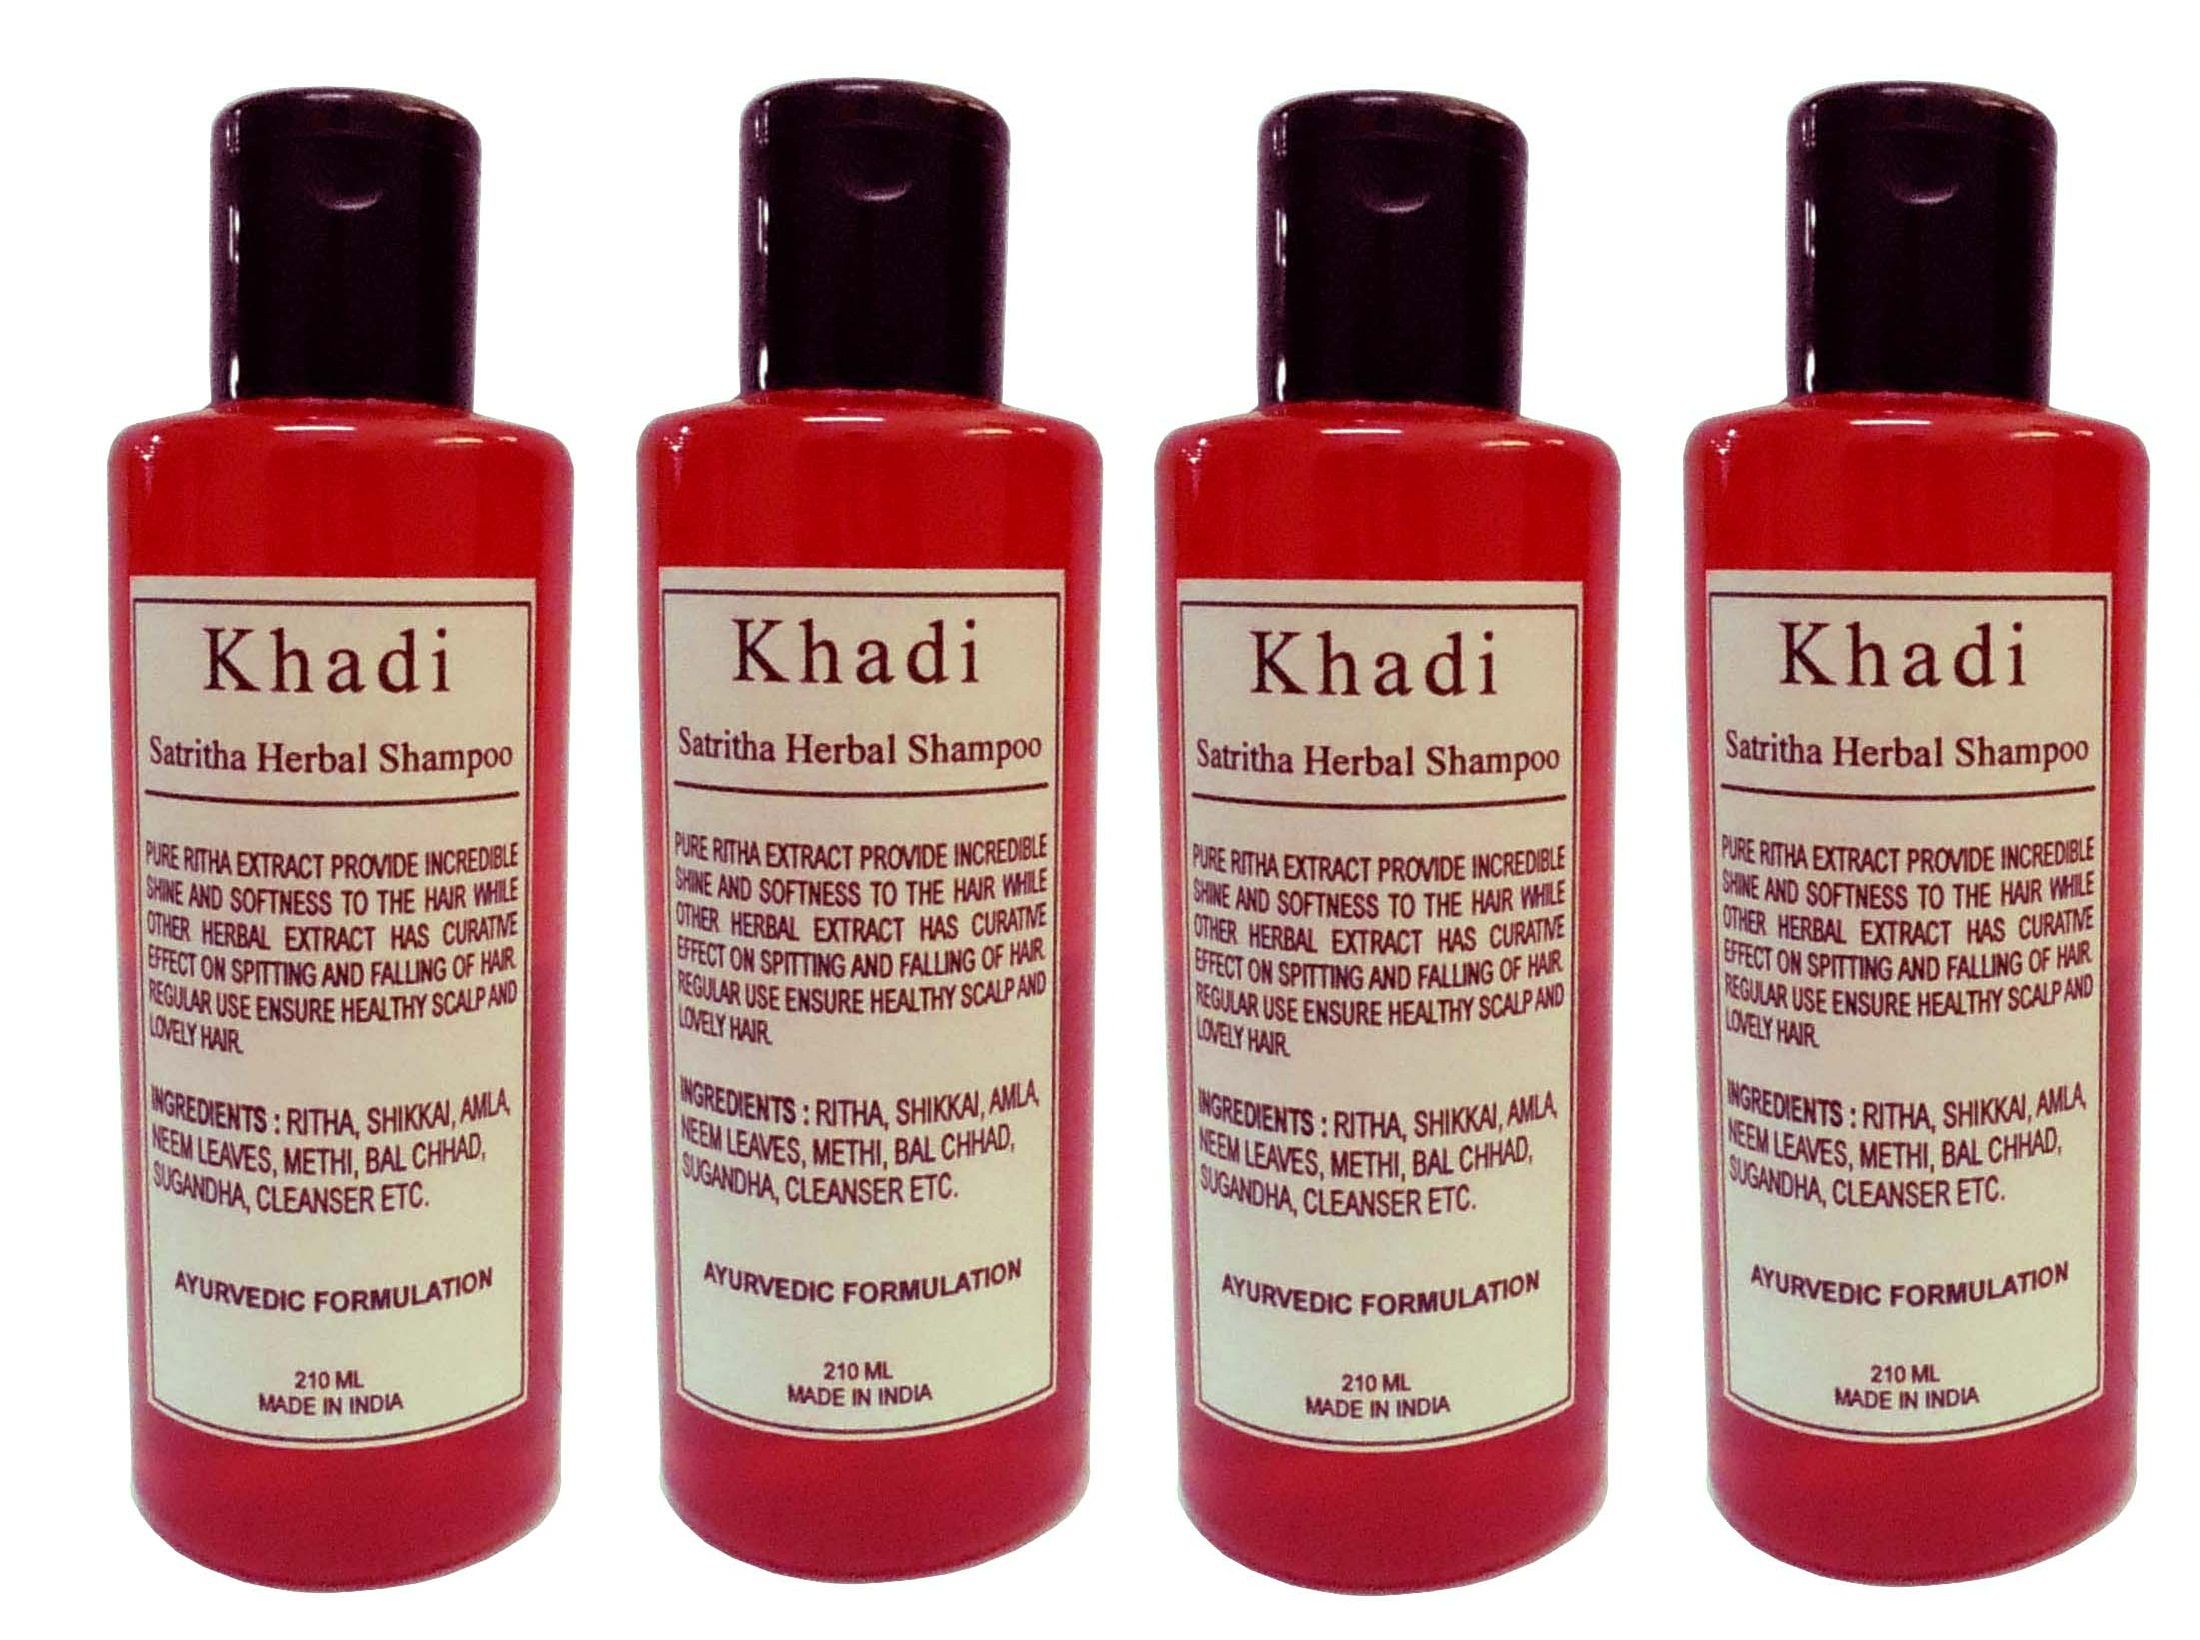     			Khadi Herbal Satritha Shampoo 210 ml Pack of 4